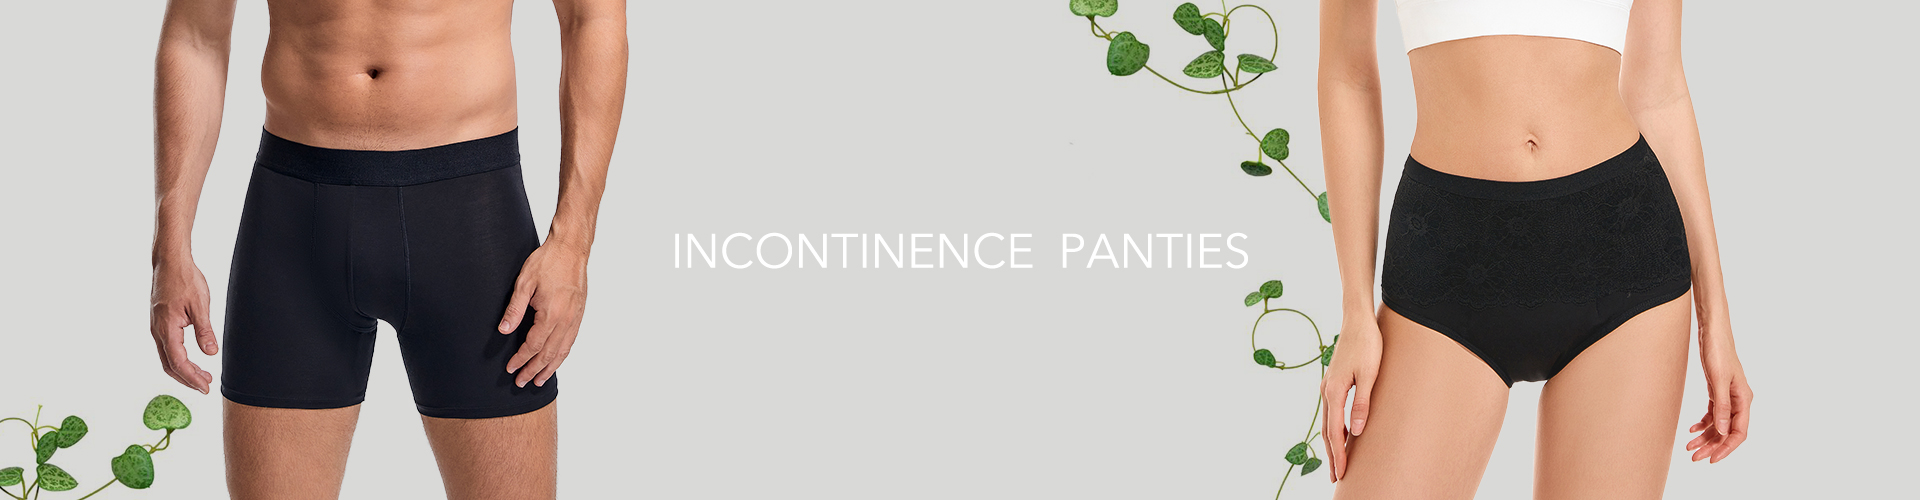 Incontinence Panties